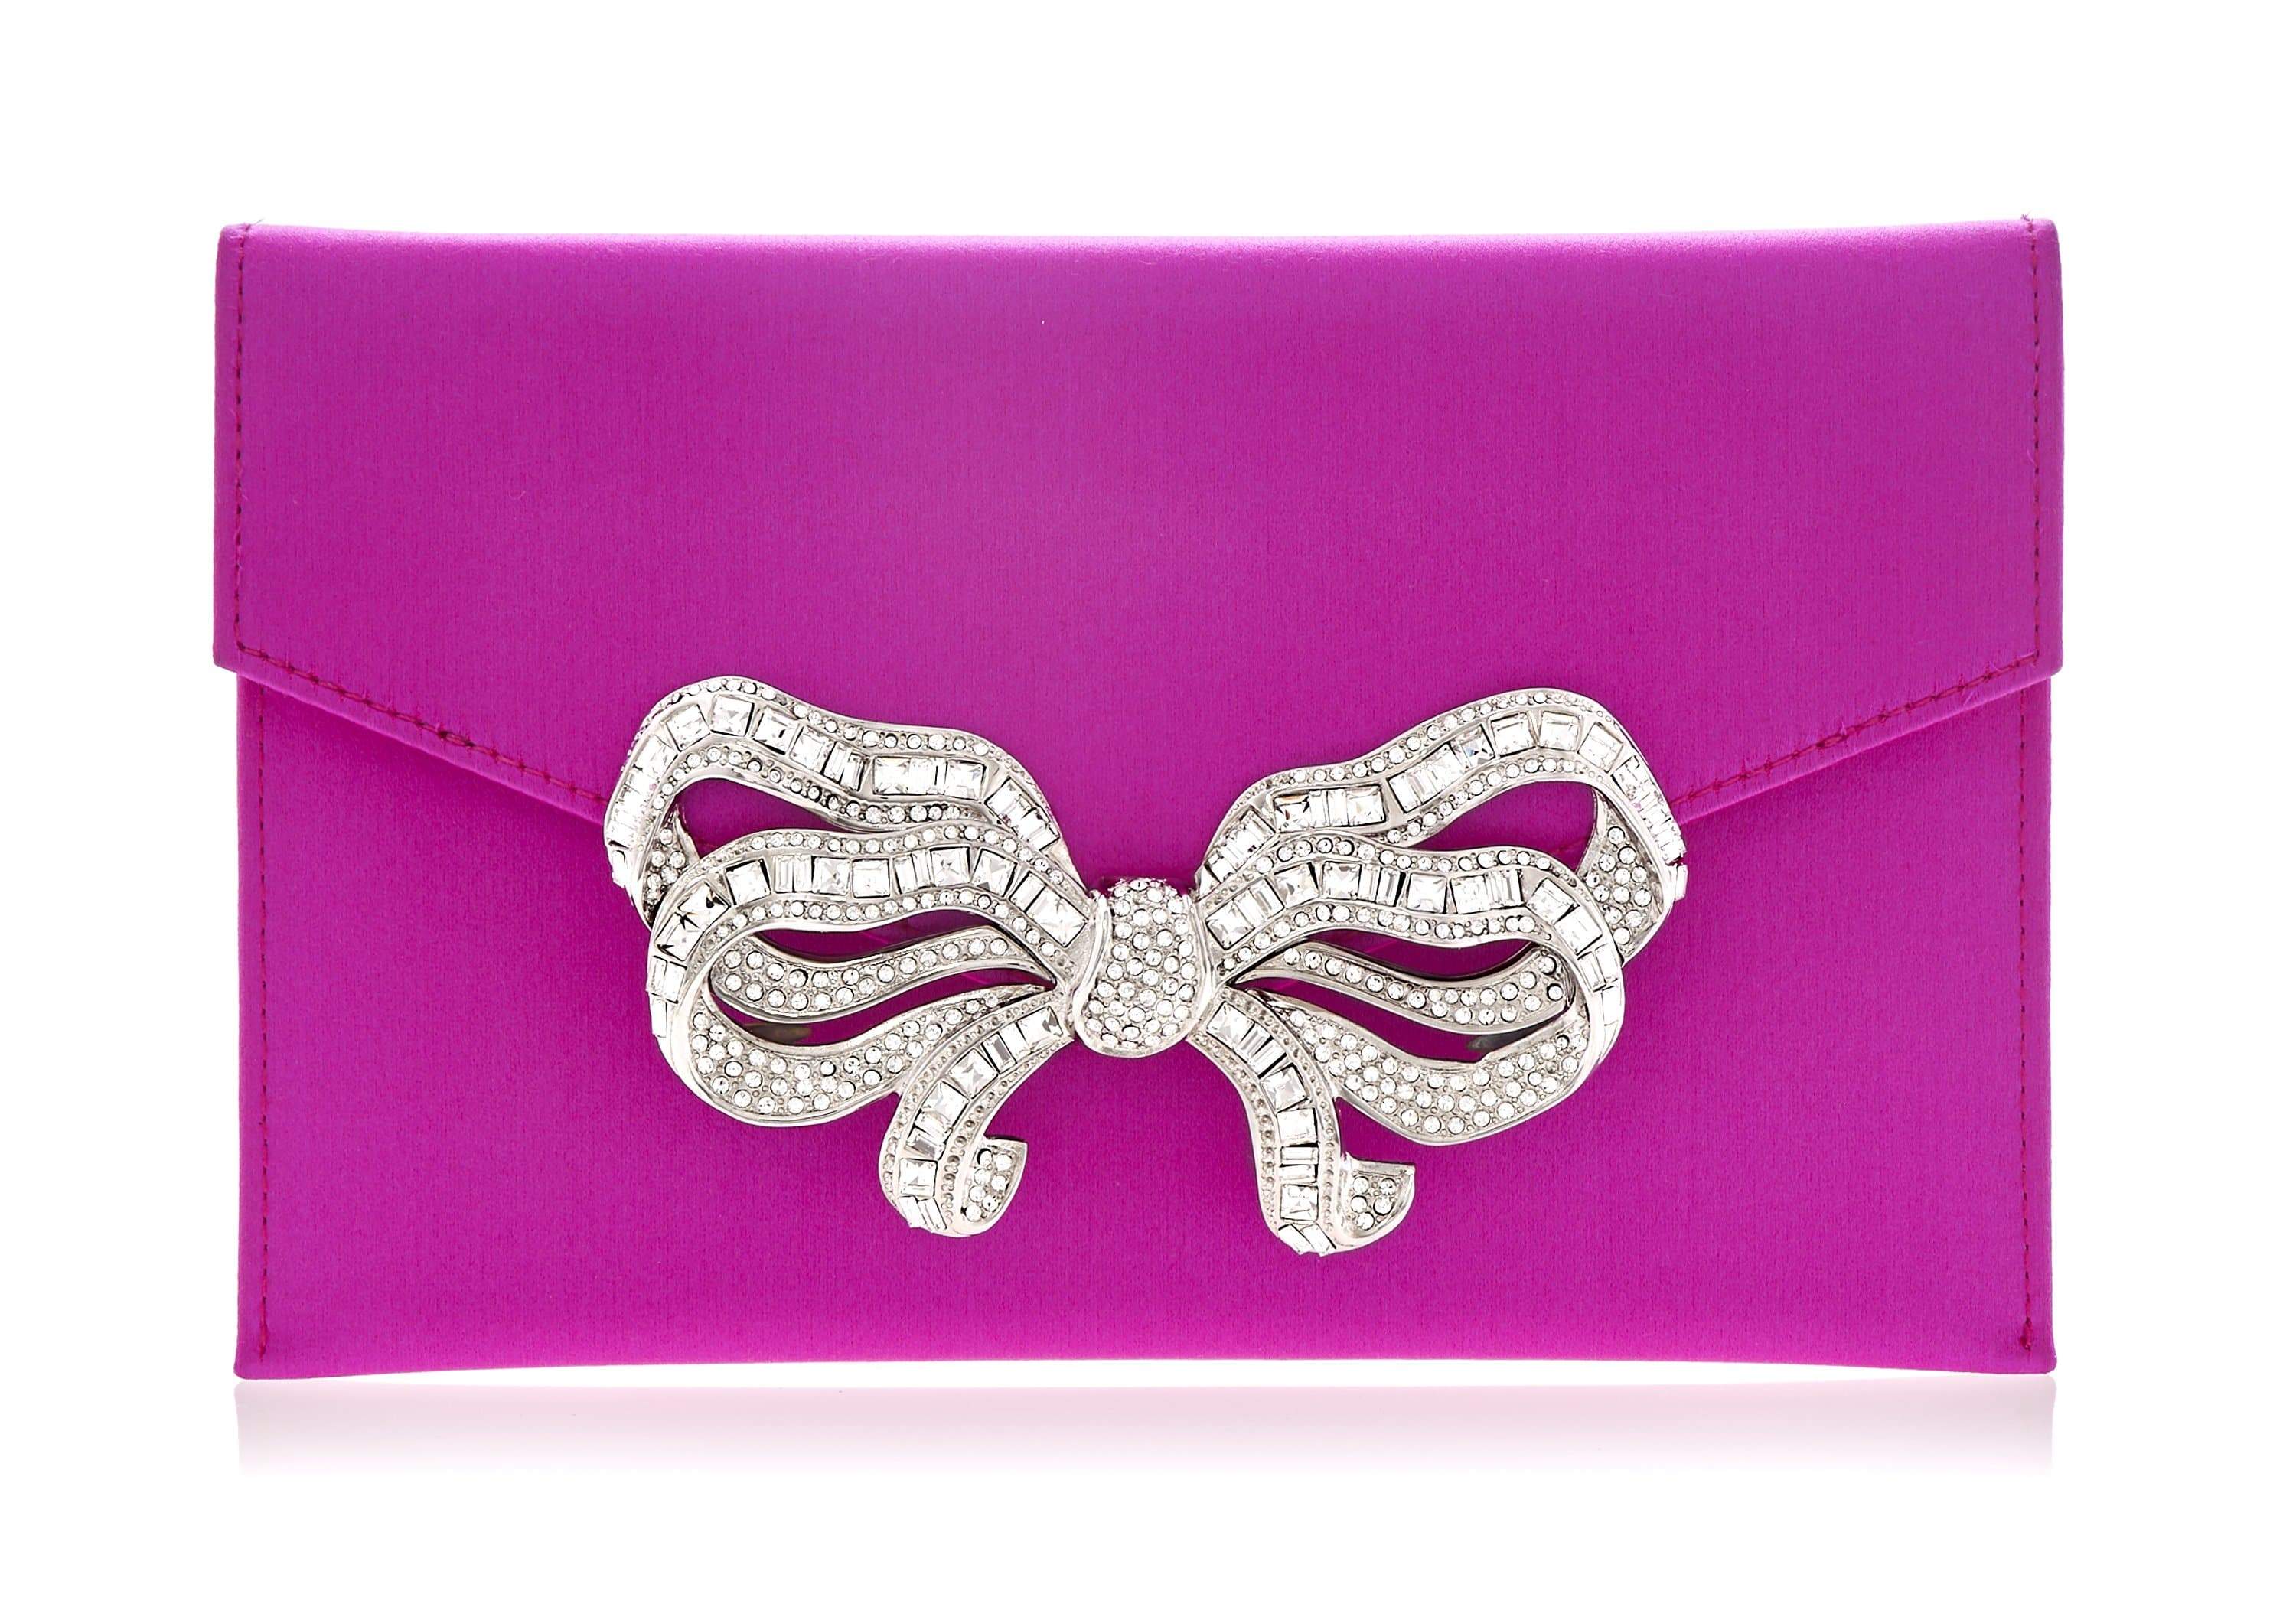 Lemonade Crystal Envelope Handbag Hot Pink - SHOP ACCESSORIES from